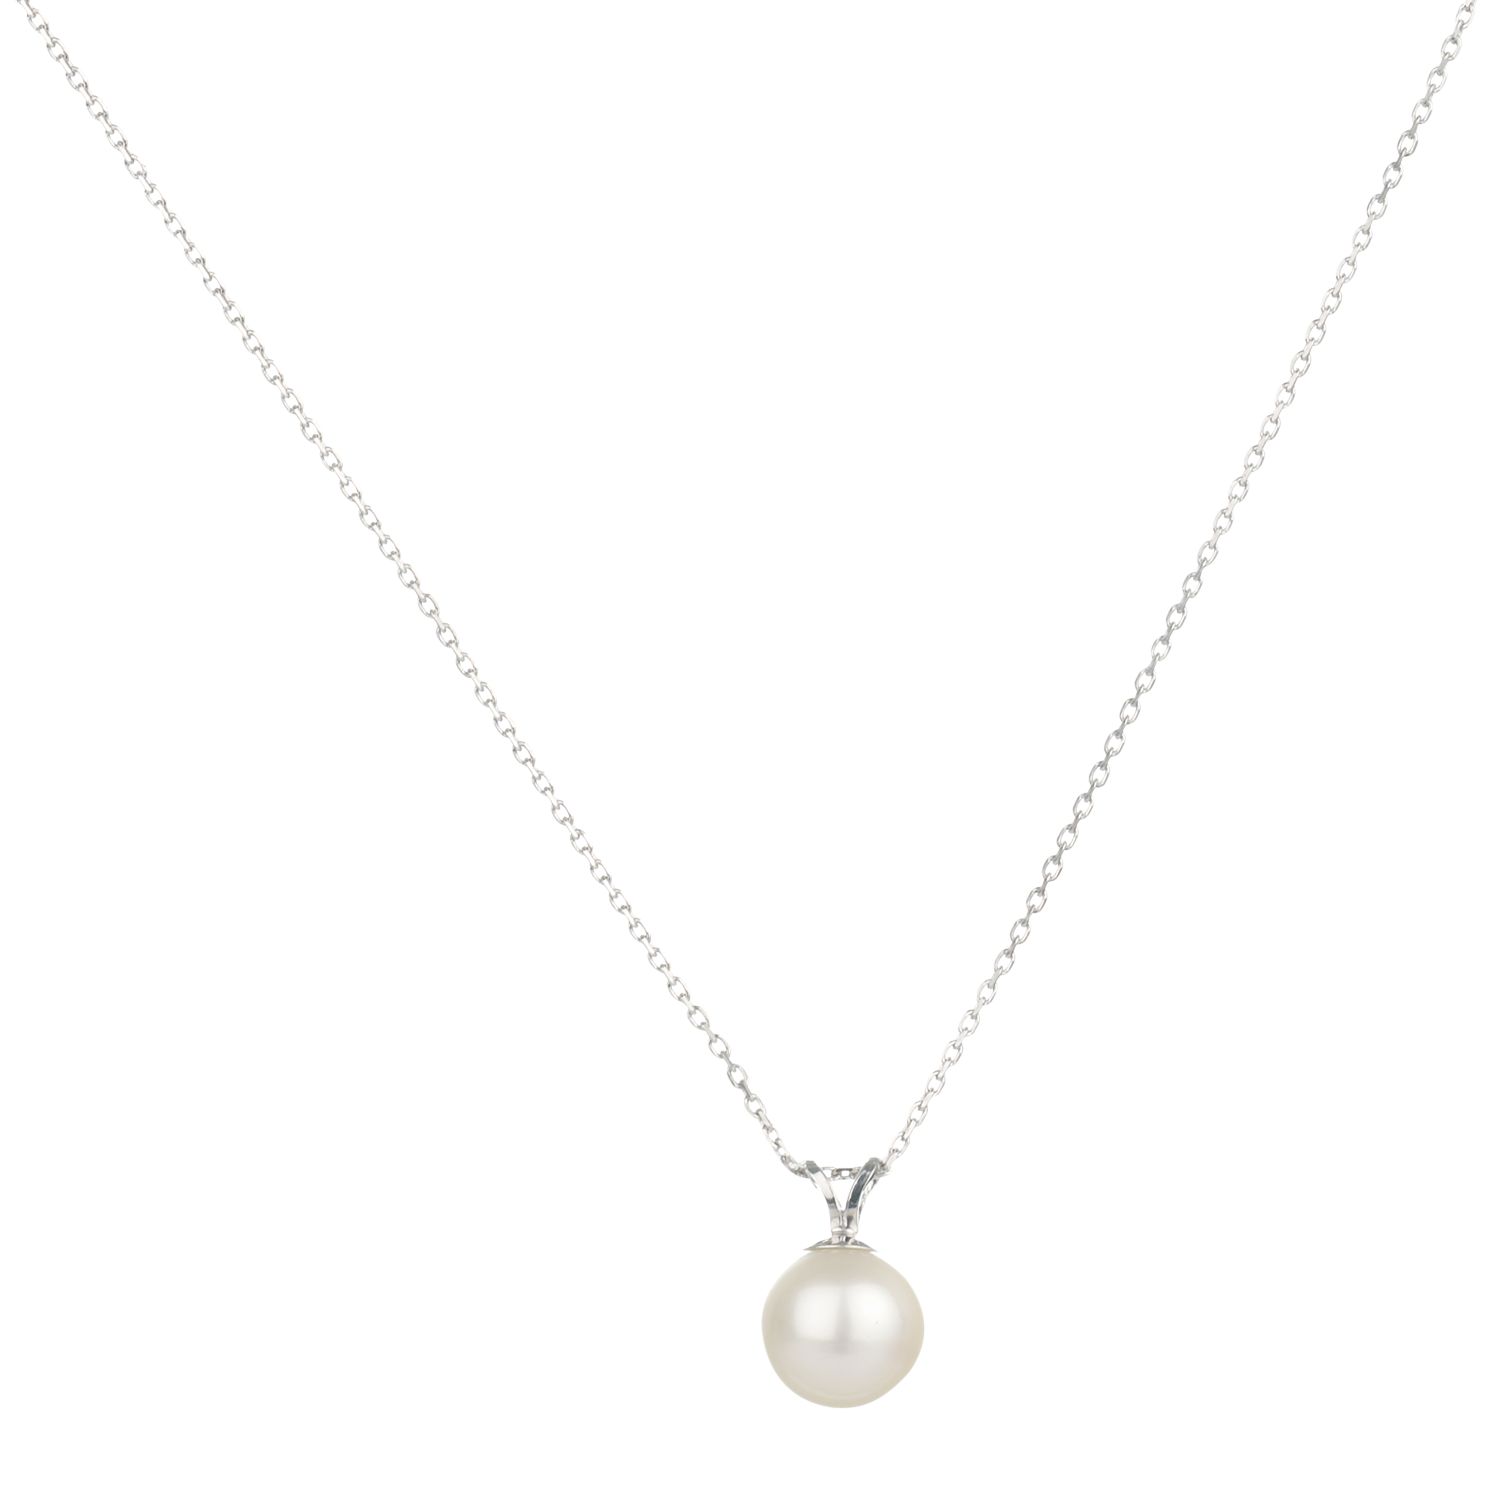 9ct white gold pendant necklace